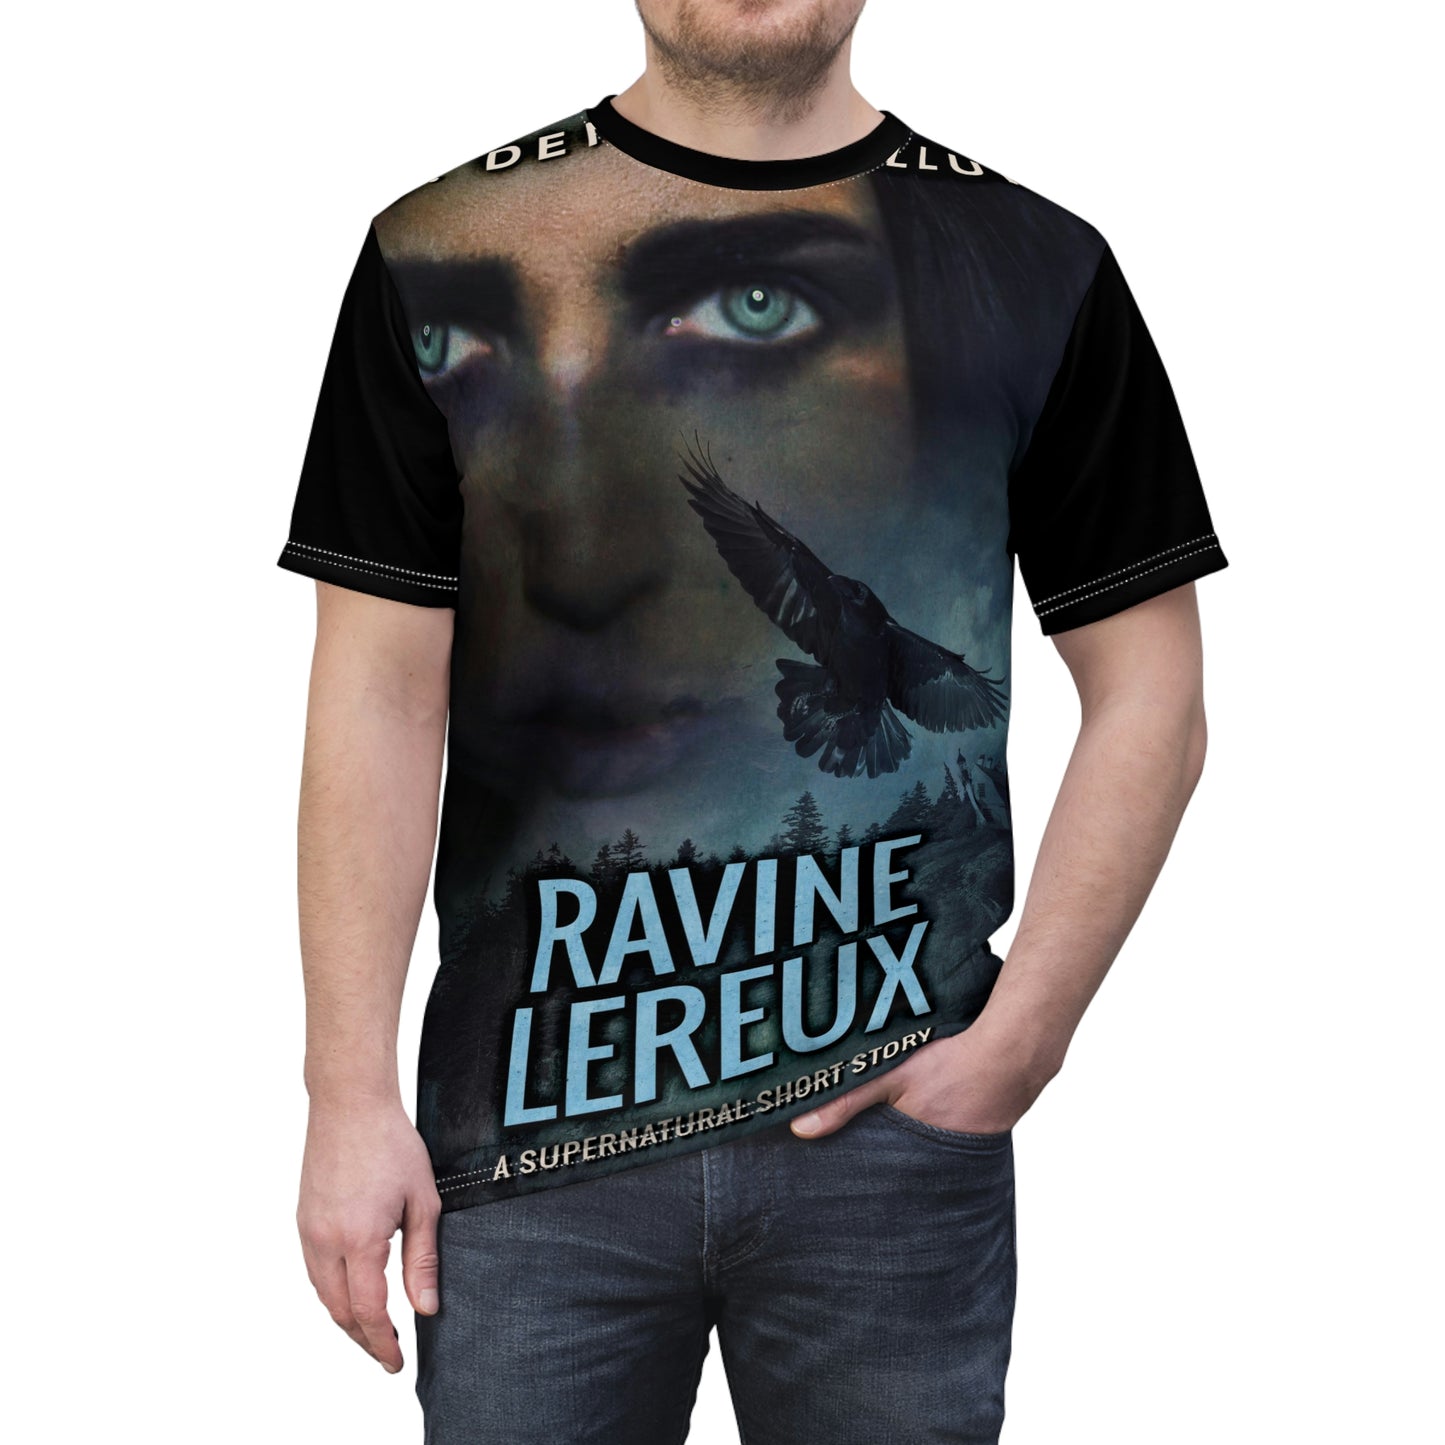 Ravine Lereux - Unisex All-Over Print Cut & Sew T-Shirt